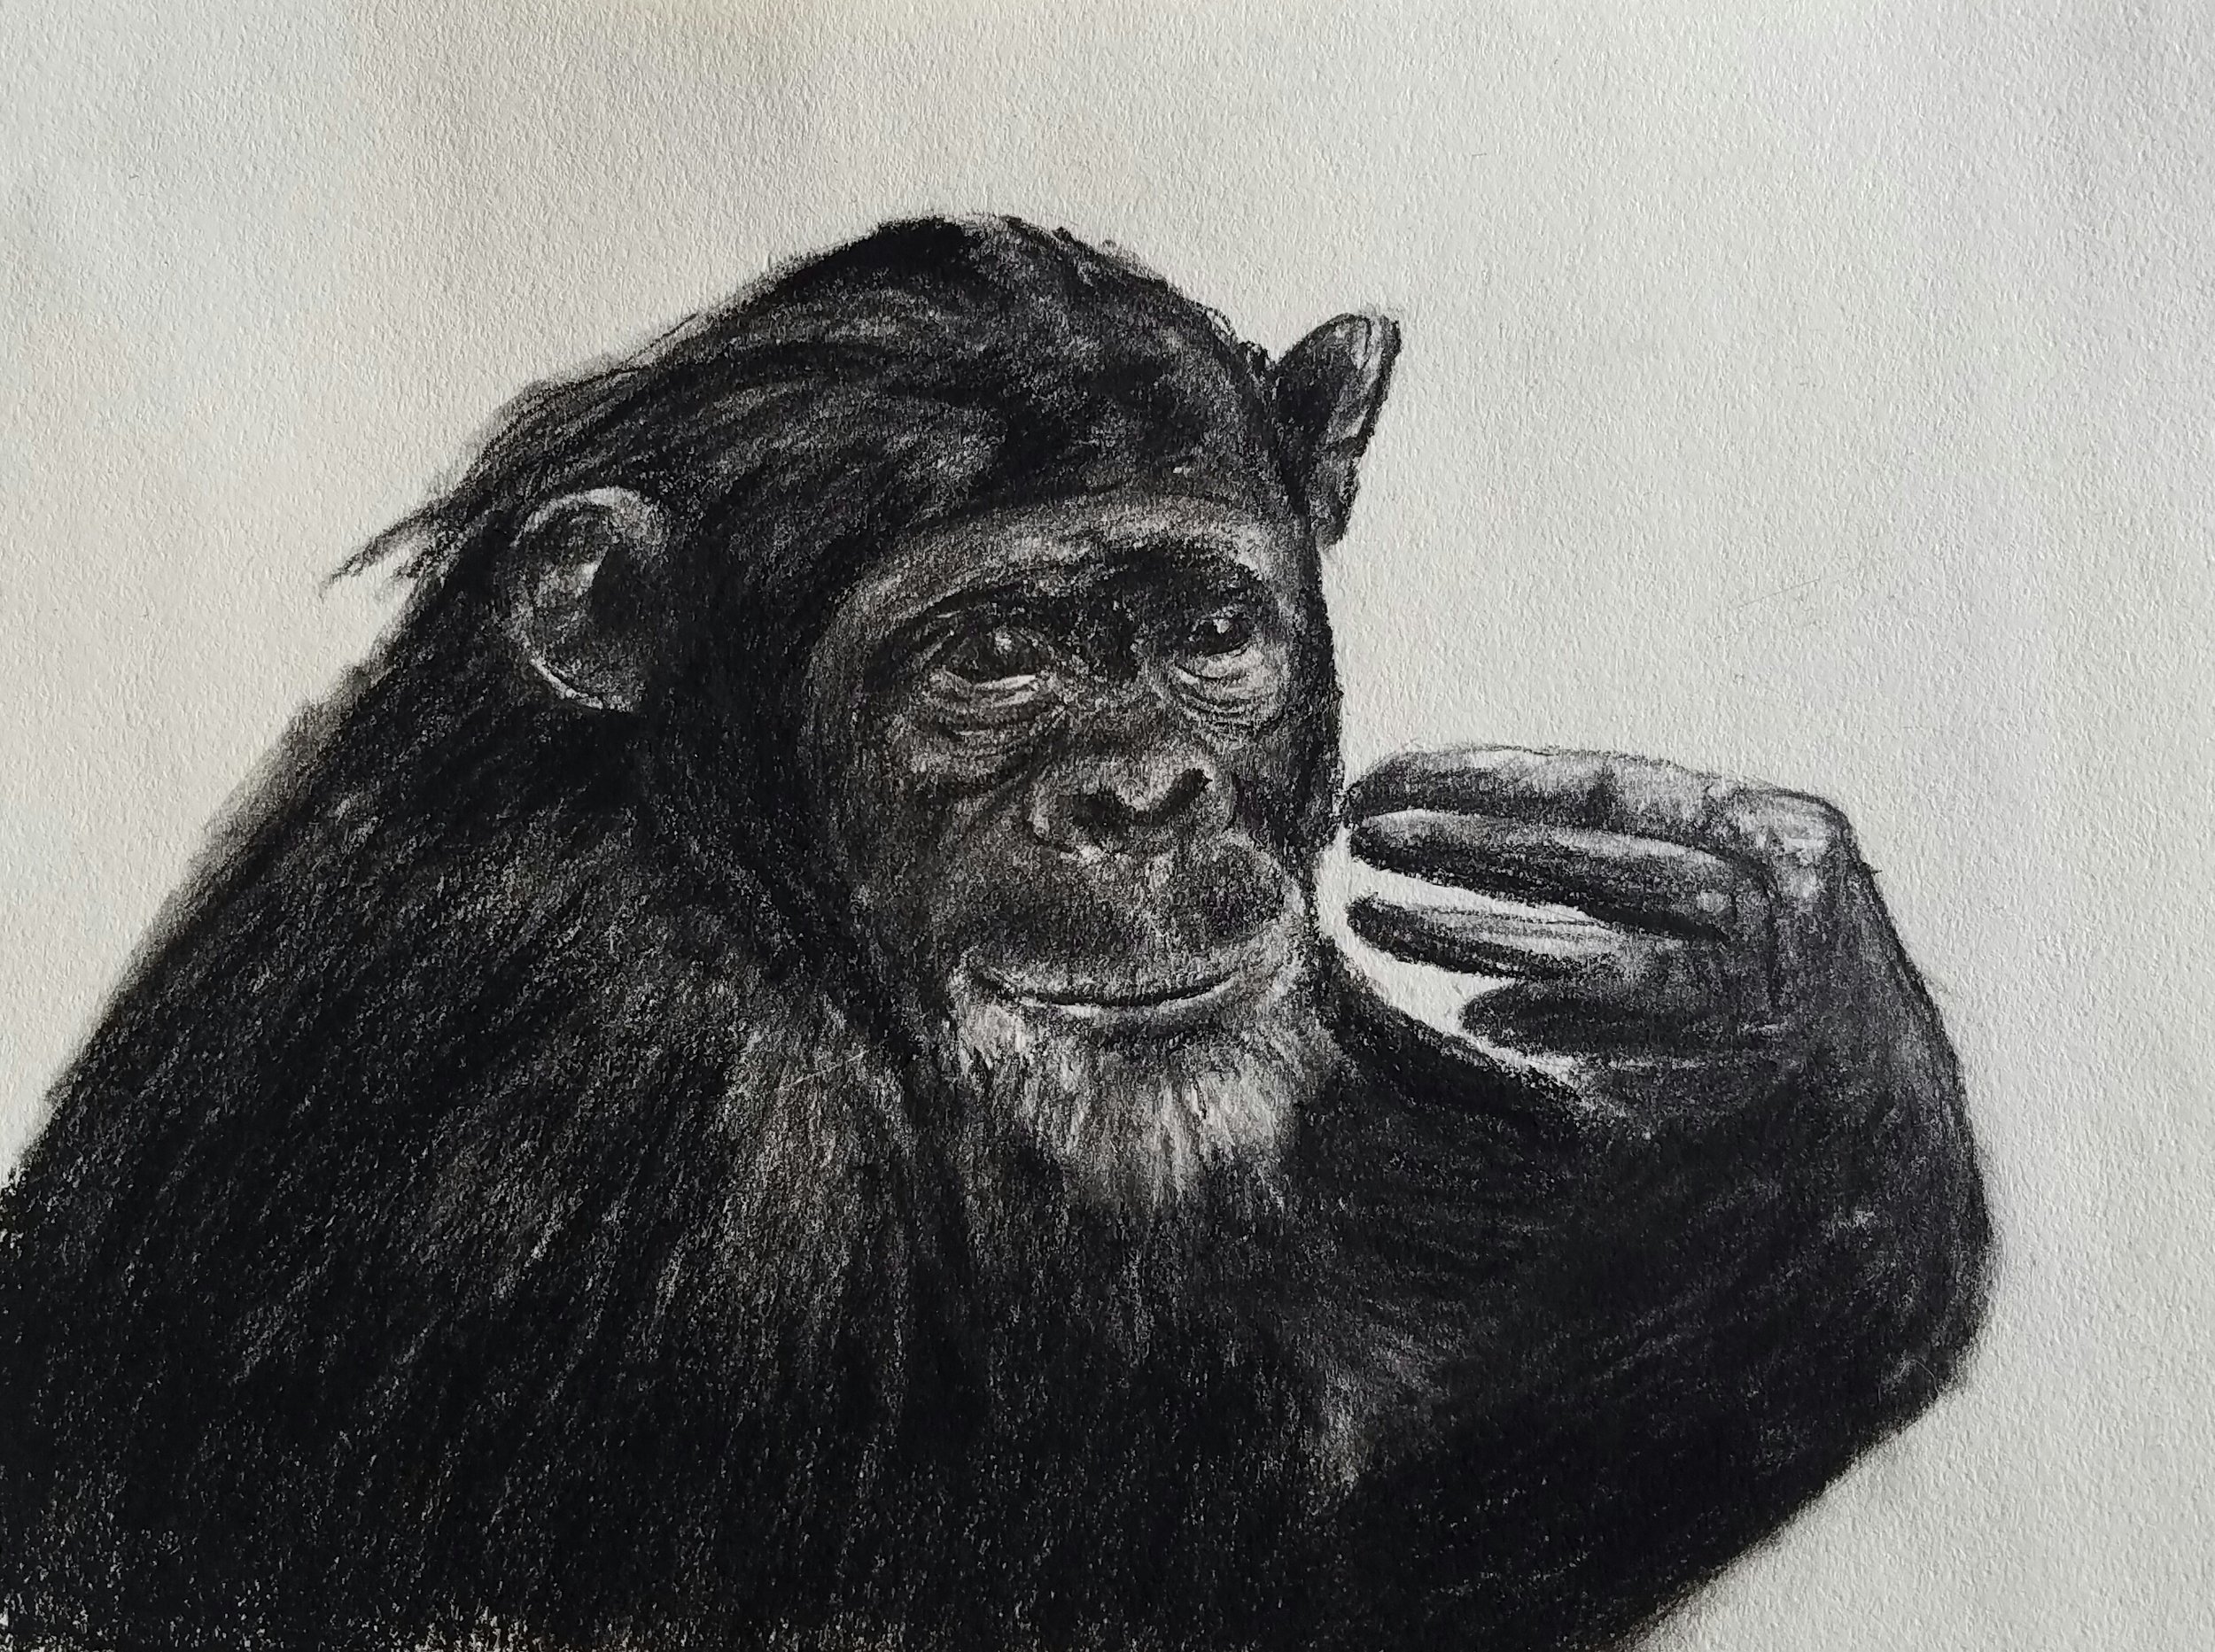 Chimpanzee, charcoal, 2017